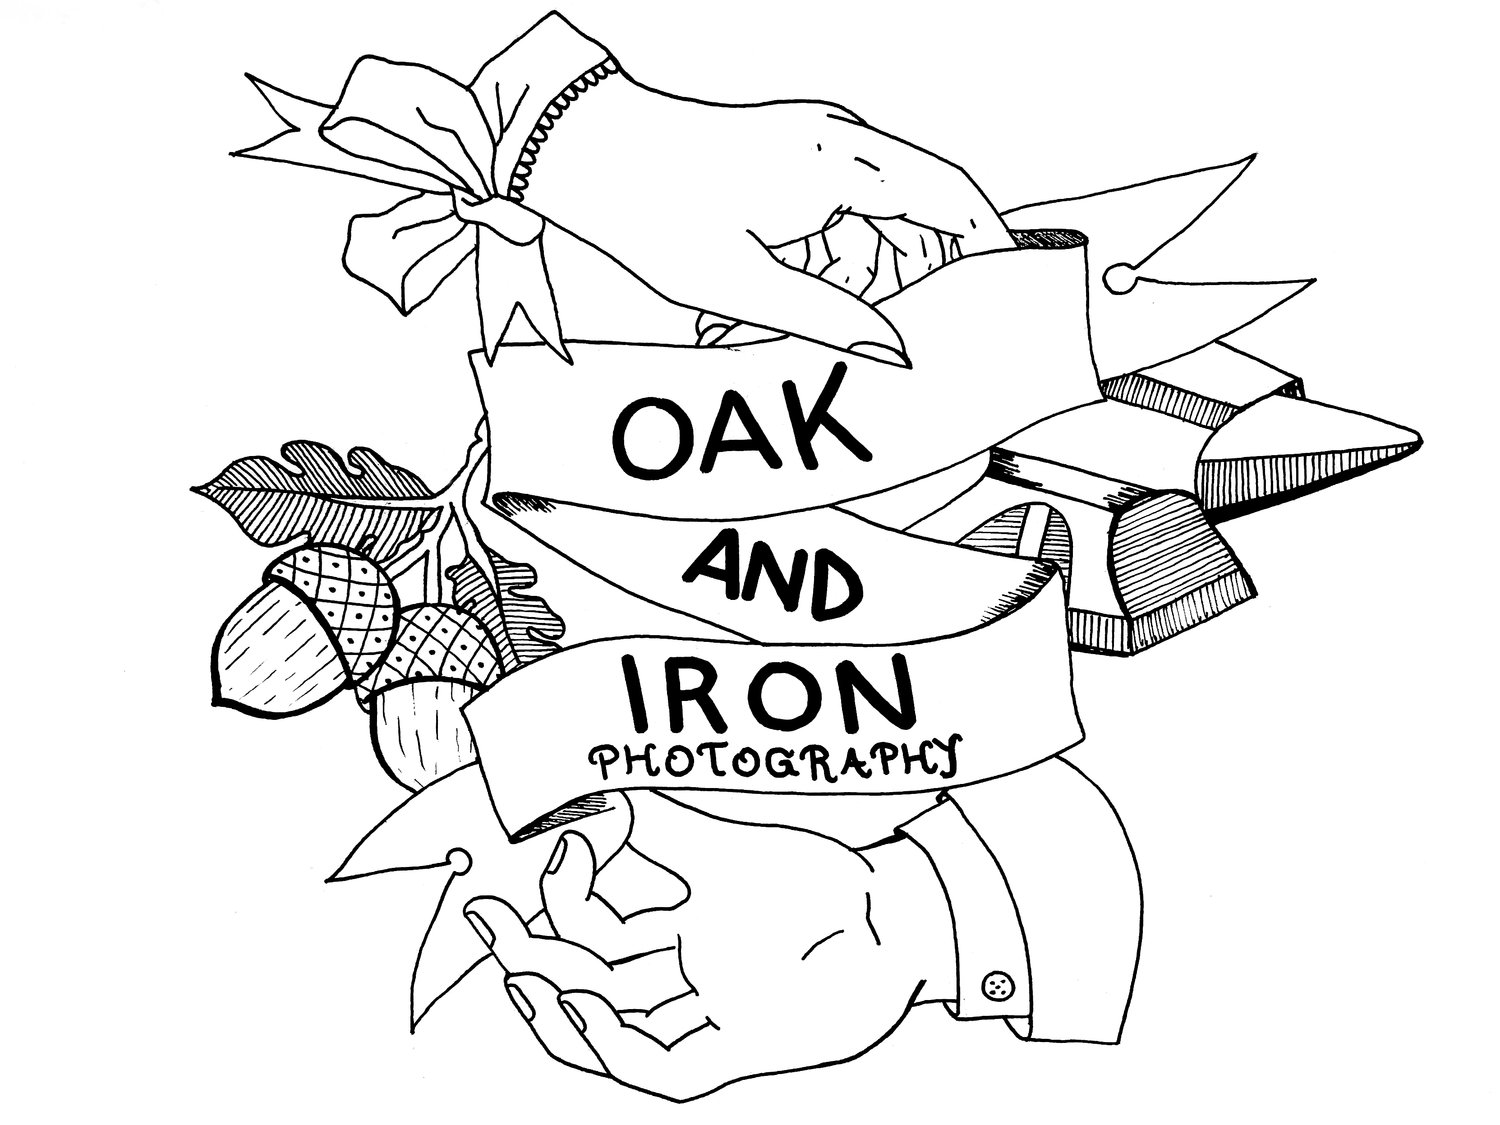 Oak and Iron Photography